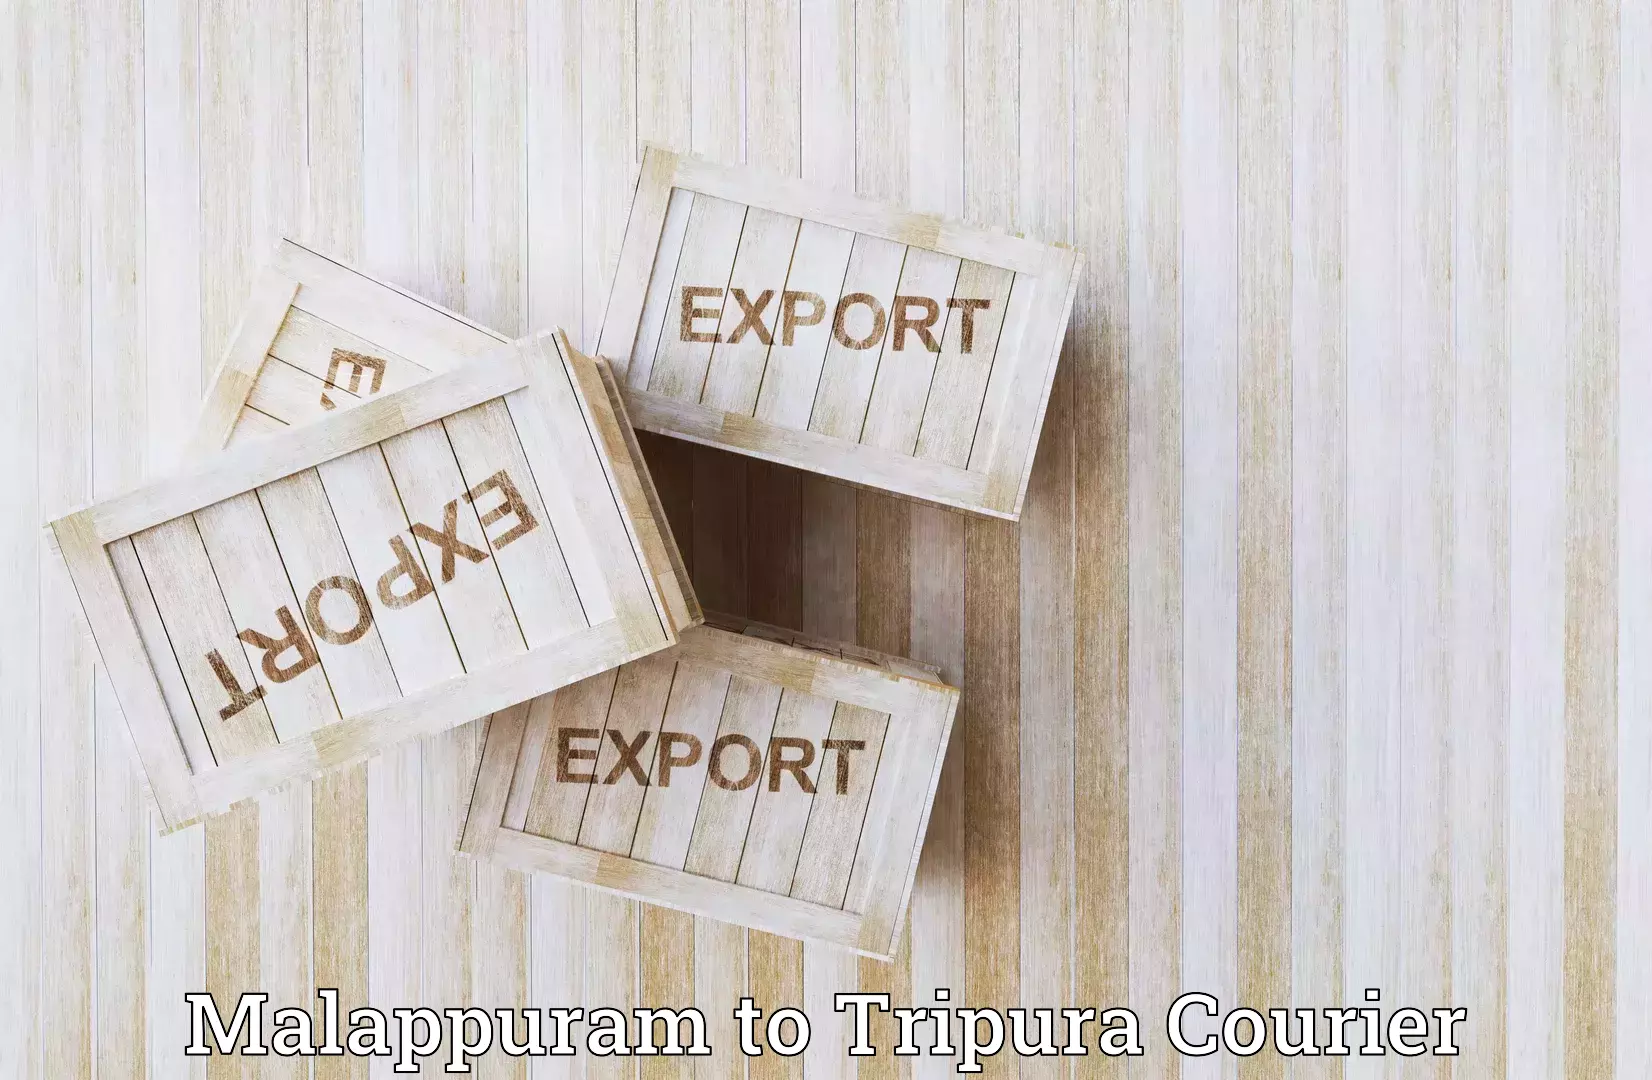 Express delivery capabilities Malappuram to Tripura